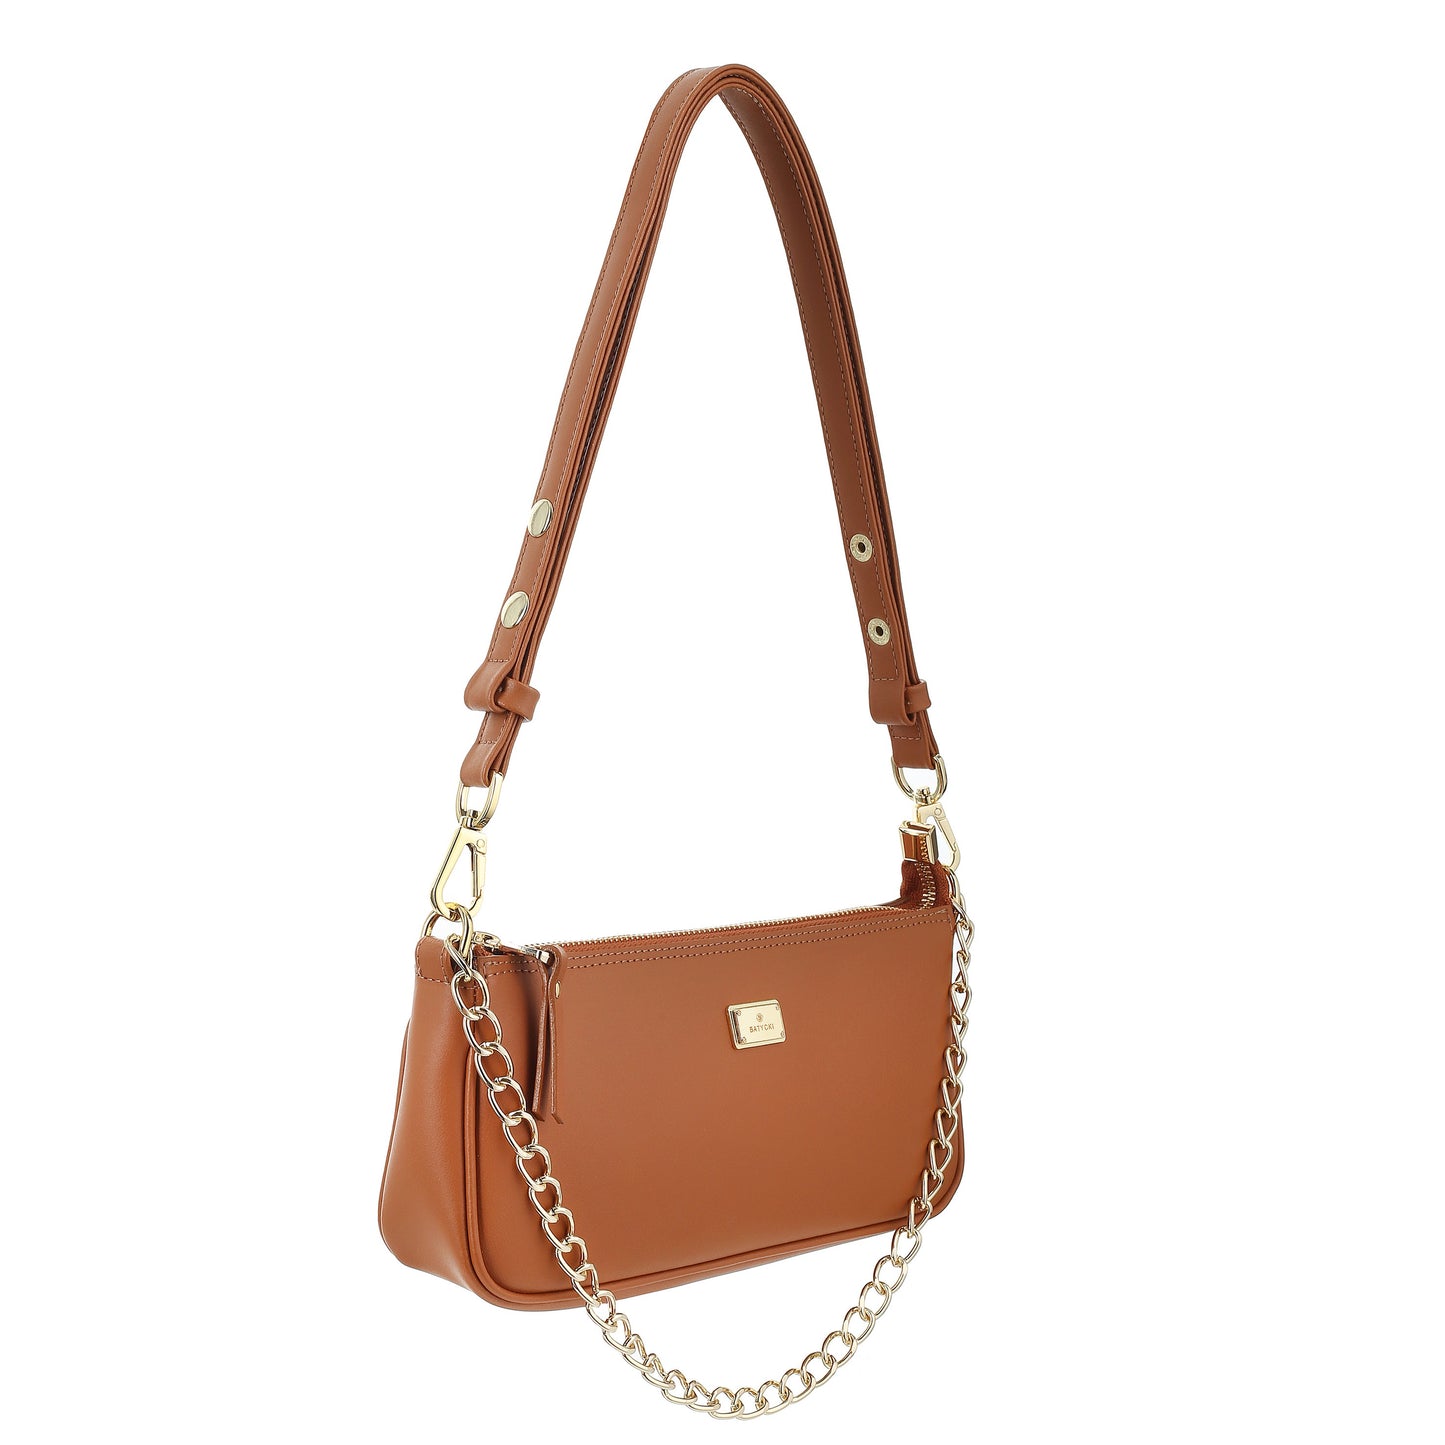 HARLEY COGNAC women's leather handbag